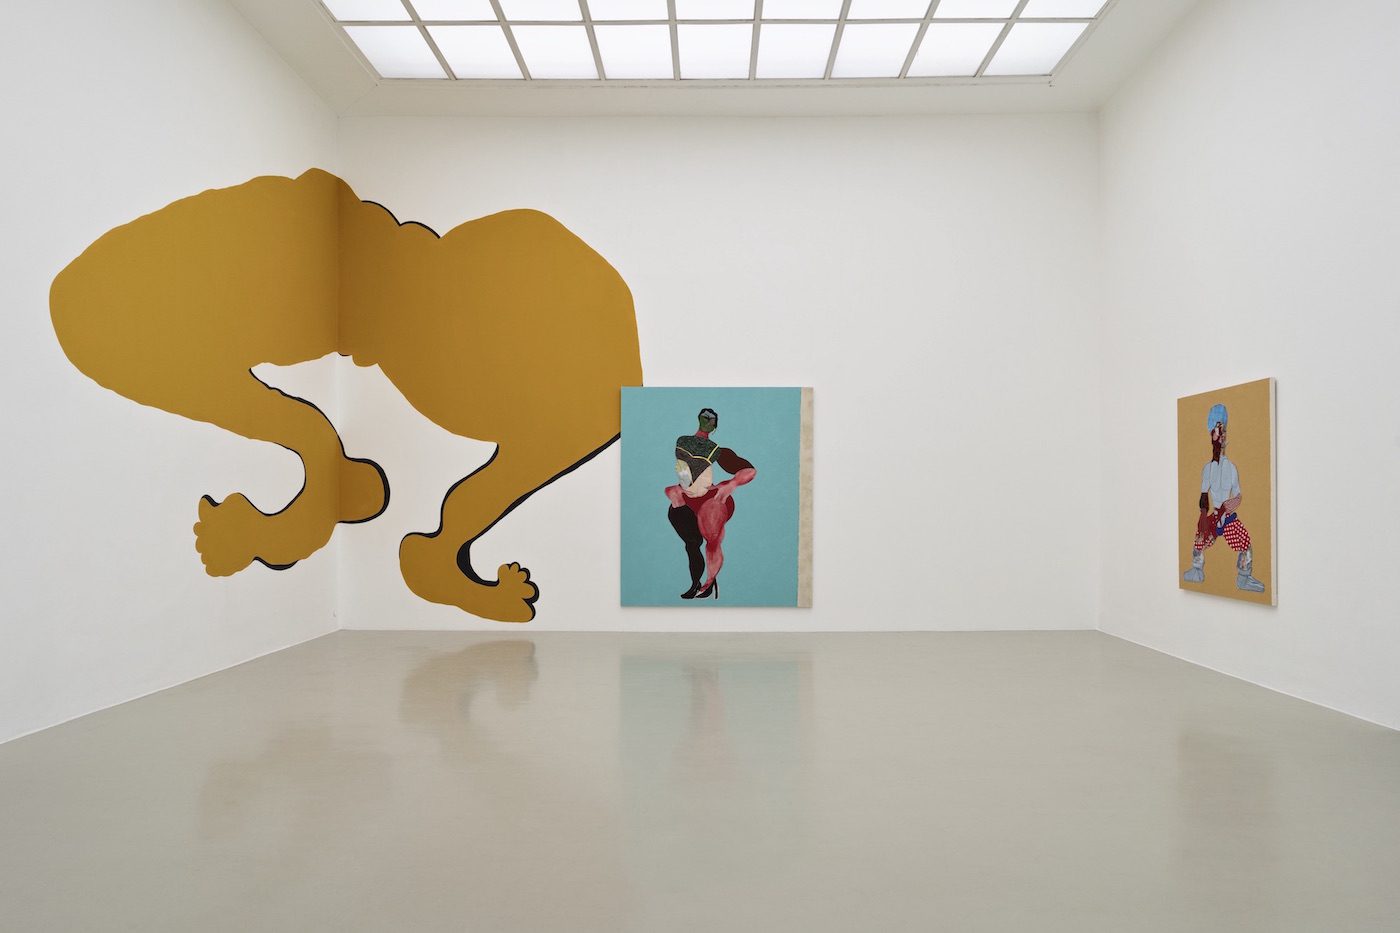 Tschabalala Self, »Leotard«, 2019 und »Polka«, 2019. Installation View at Kunstverein Hannover. Photo: Raimund Zakowski